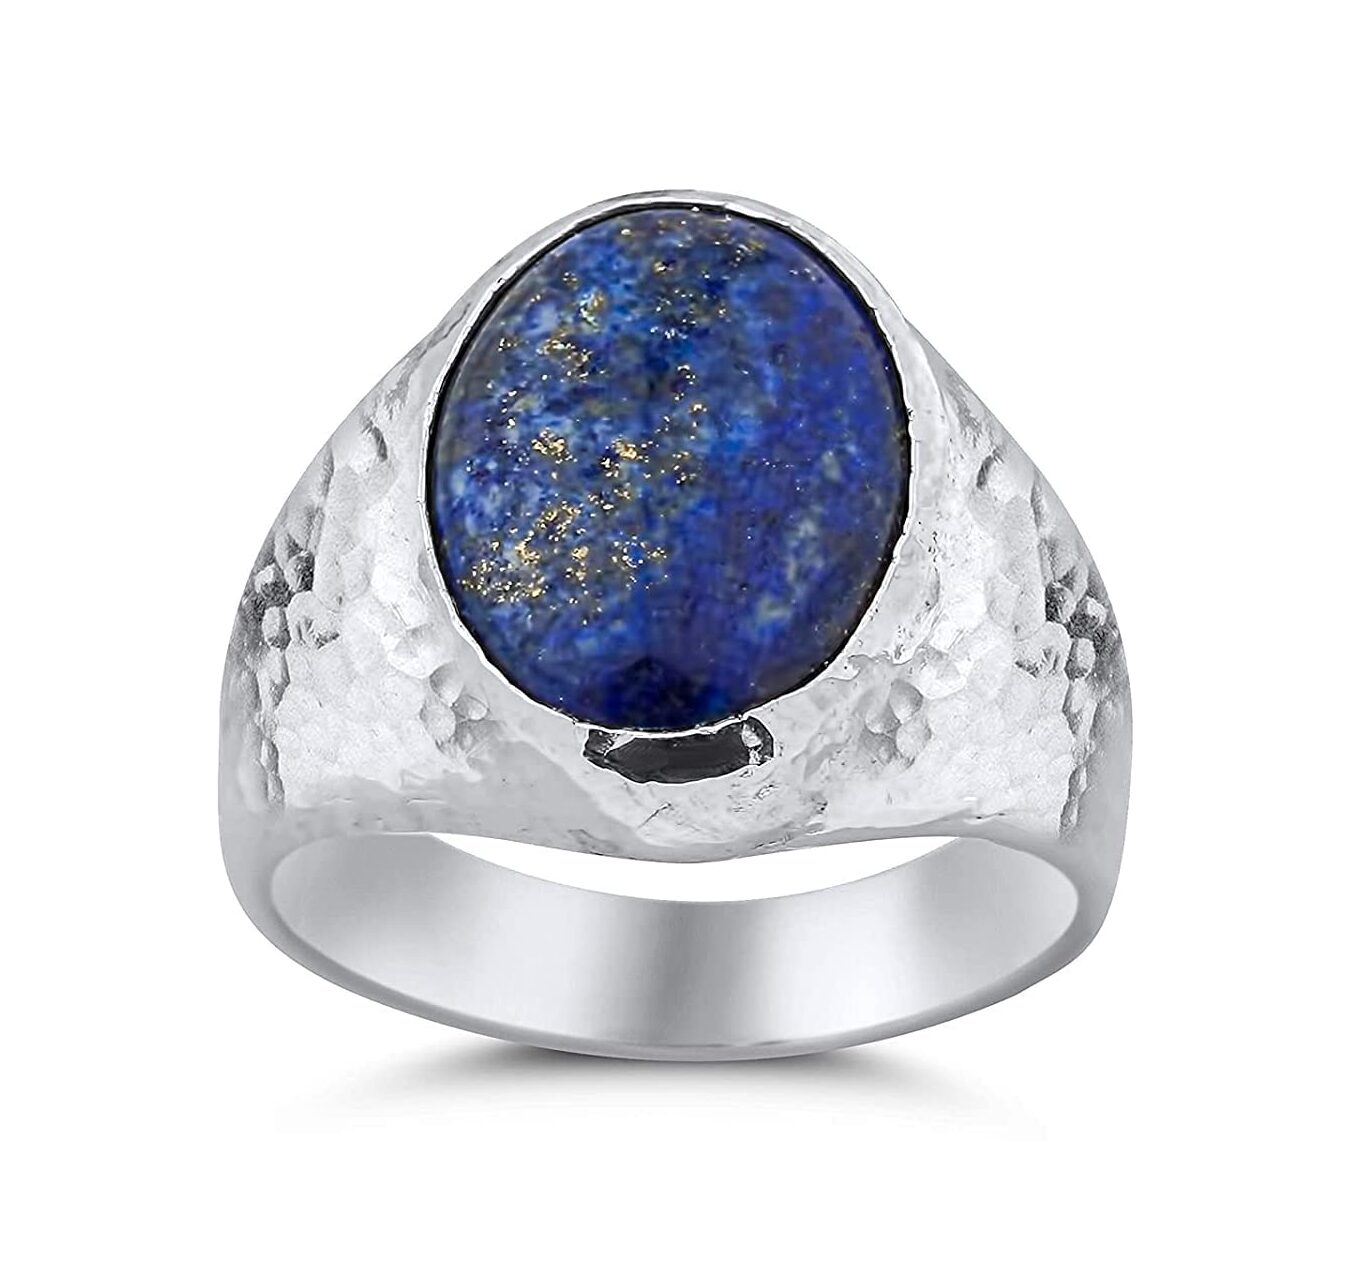 AtlantisFineJewels 925 k Sterling Silver Blue Lapis Lazuli Gemstone Men's Ring Hammered Handmade Ancient Art Turkish Artisan Jewelry by OMER (9)